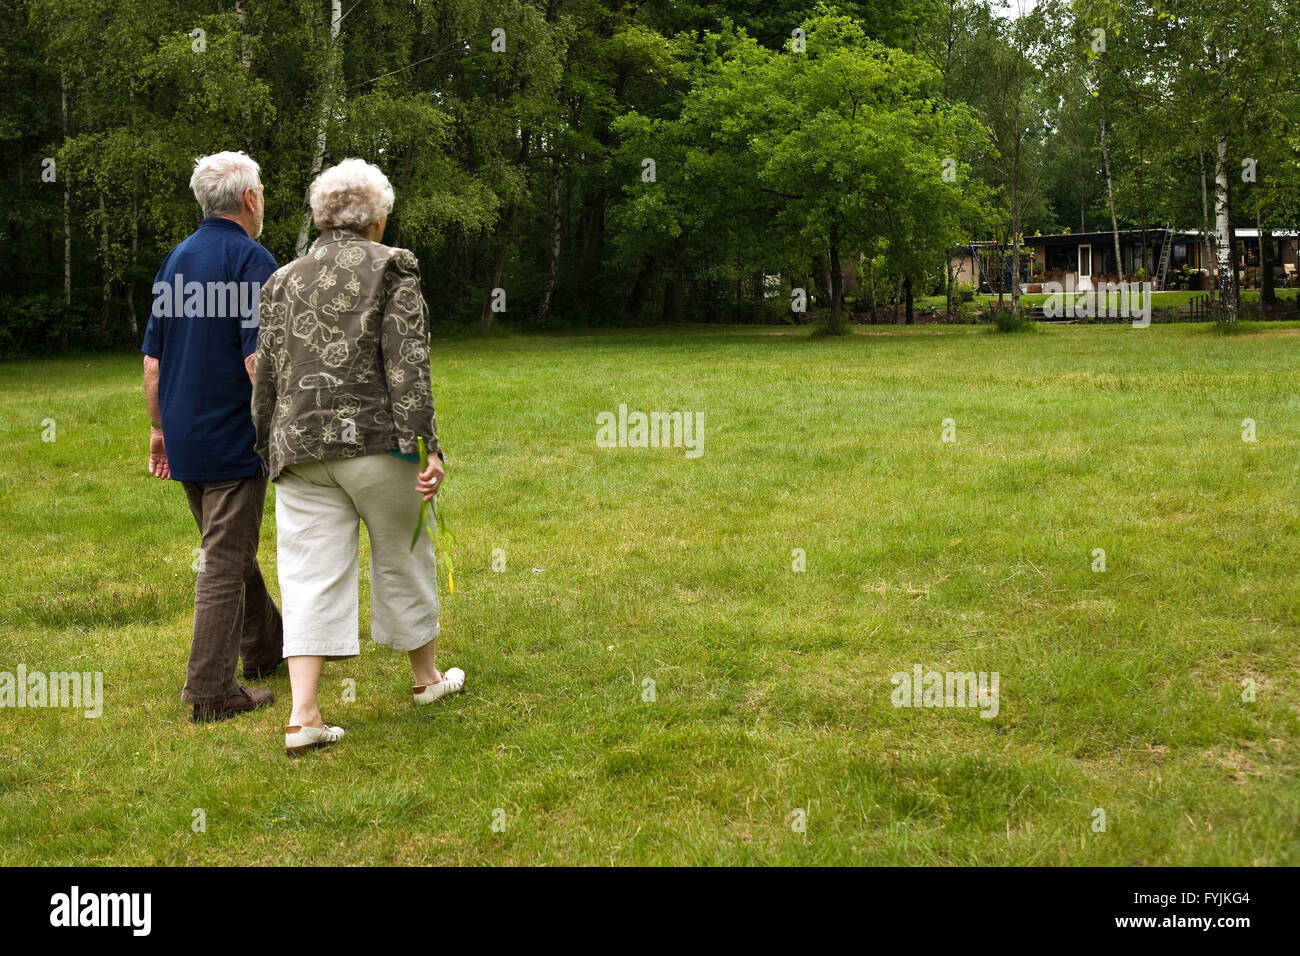 Older couple walking through a park Stock Photo